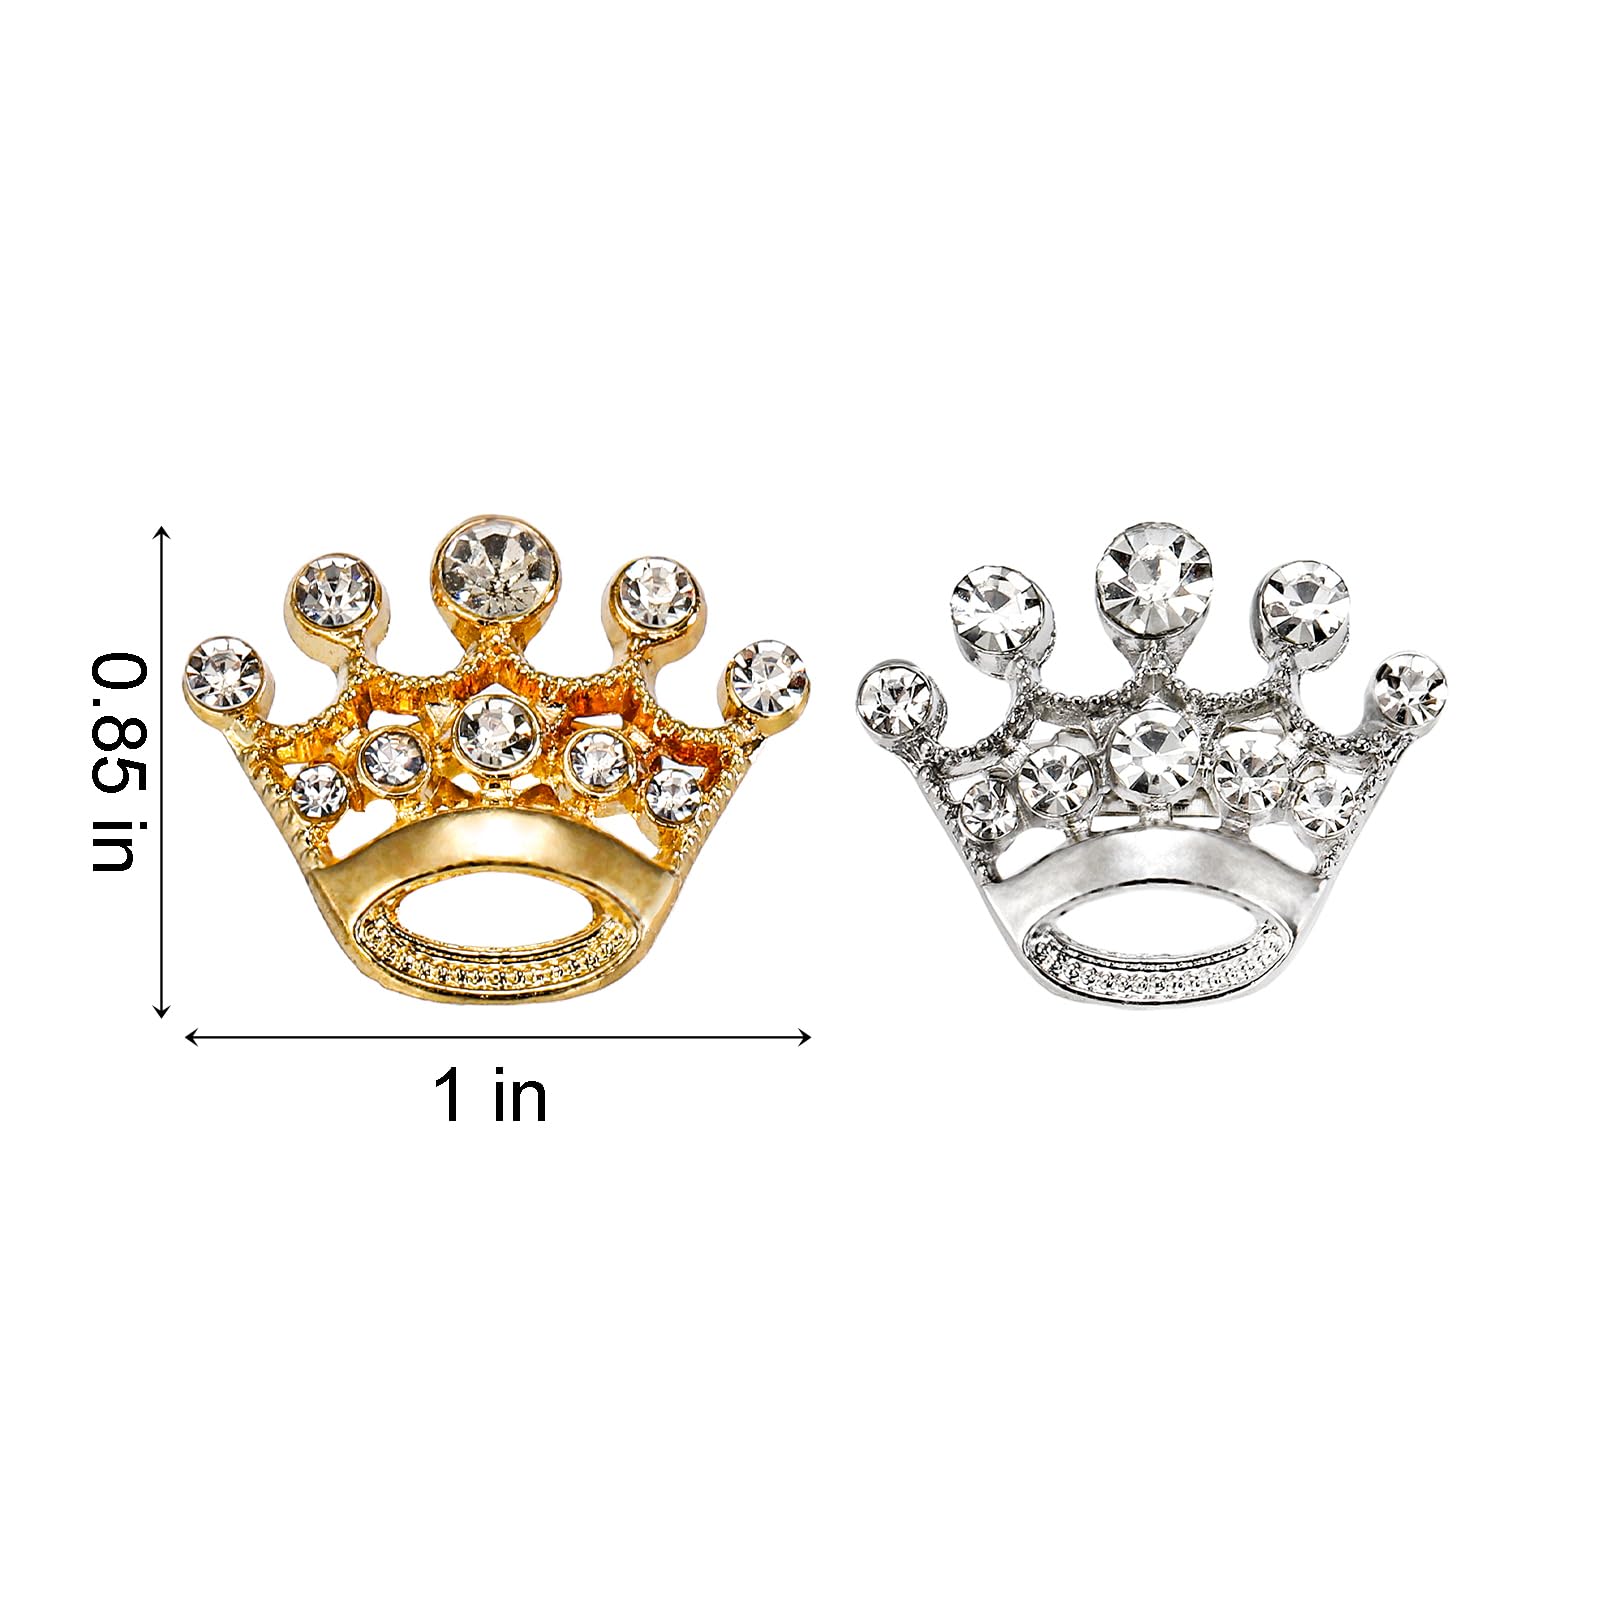 Okllen 48 Pieces Small Crown Brooches, Silver Gold Crown Pins, Fashion Rhinestone Brooch Pins for Women, Men, Lapel, Sashes, Wedding